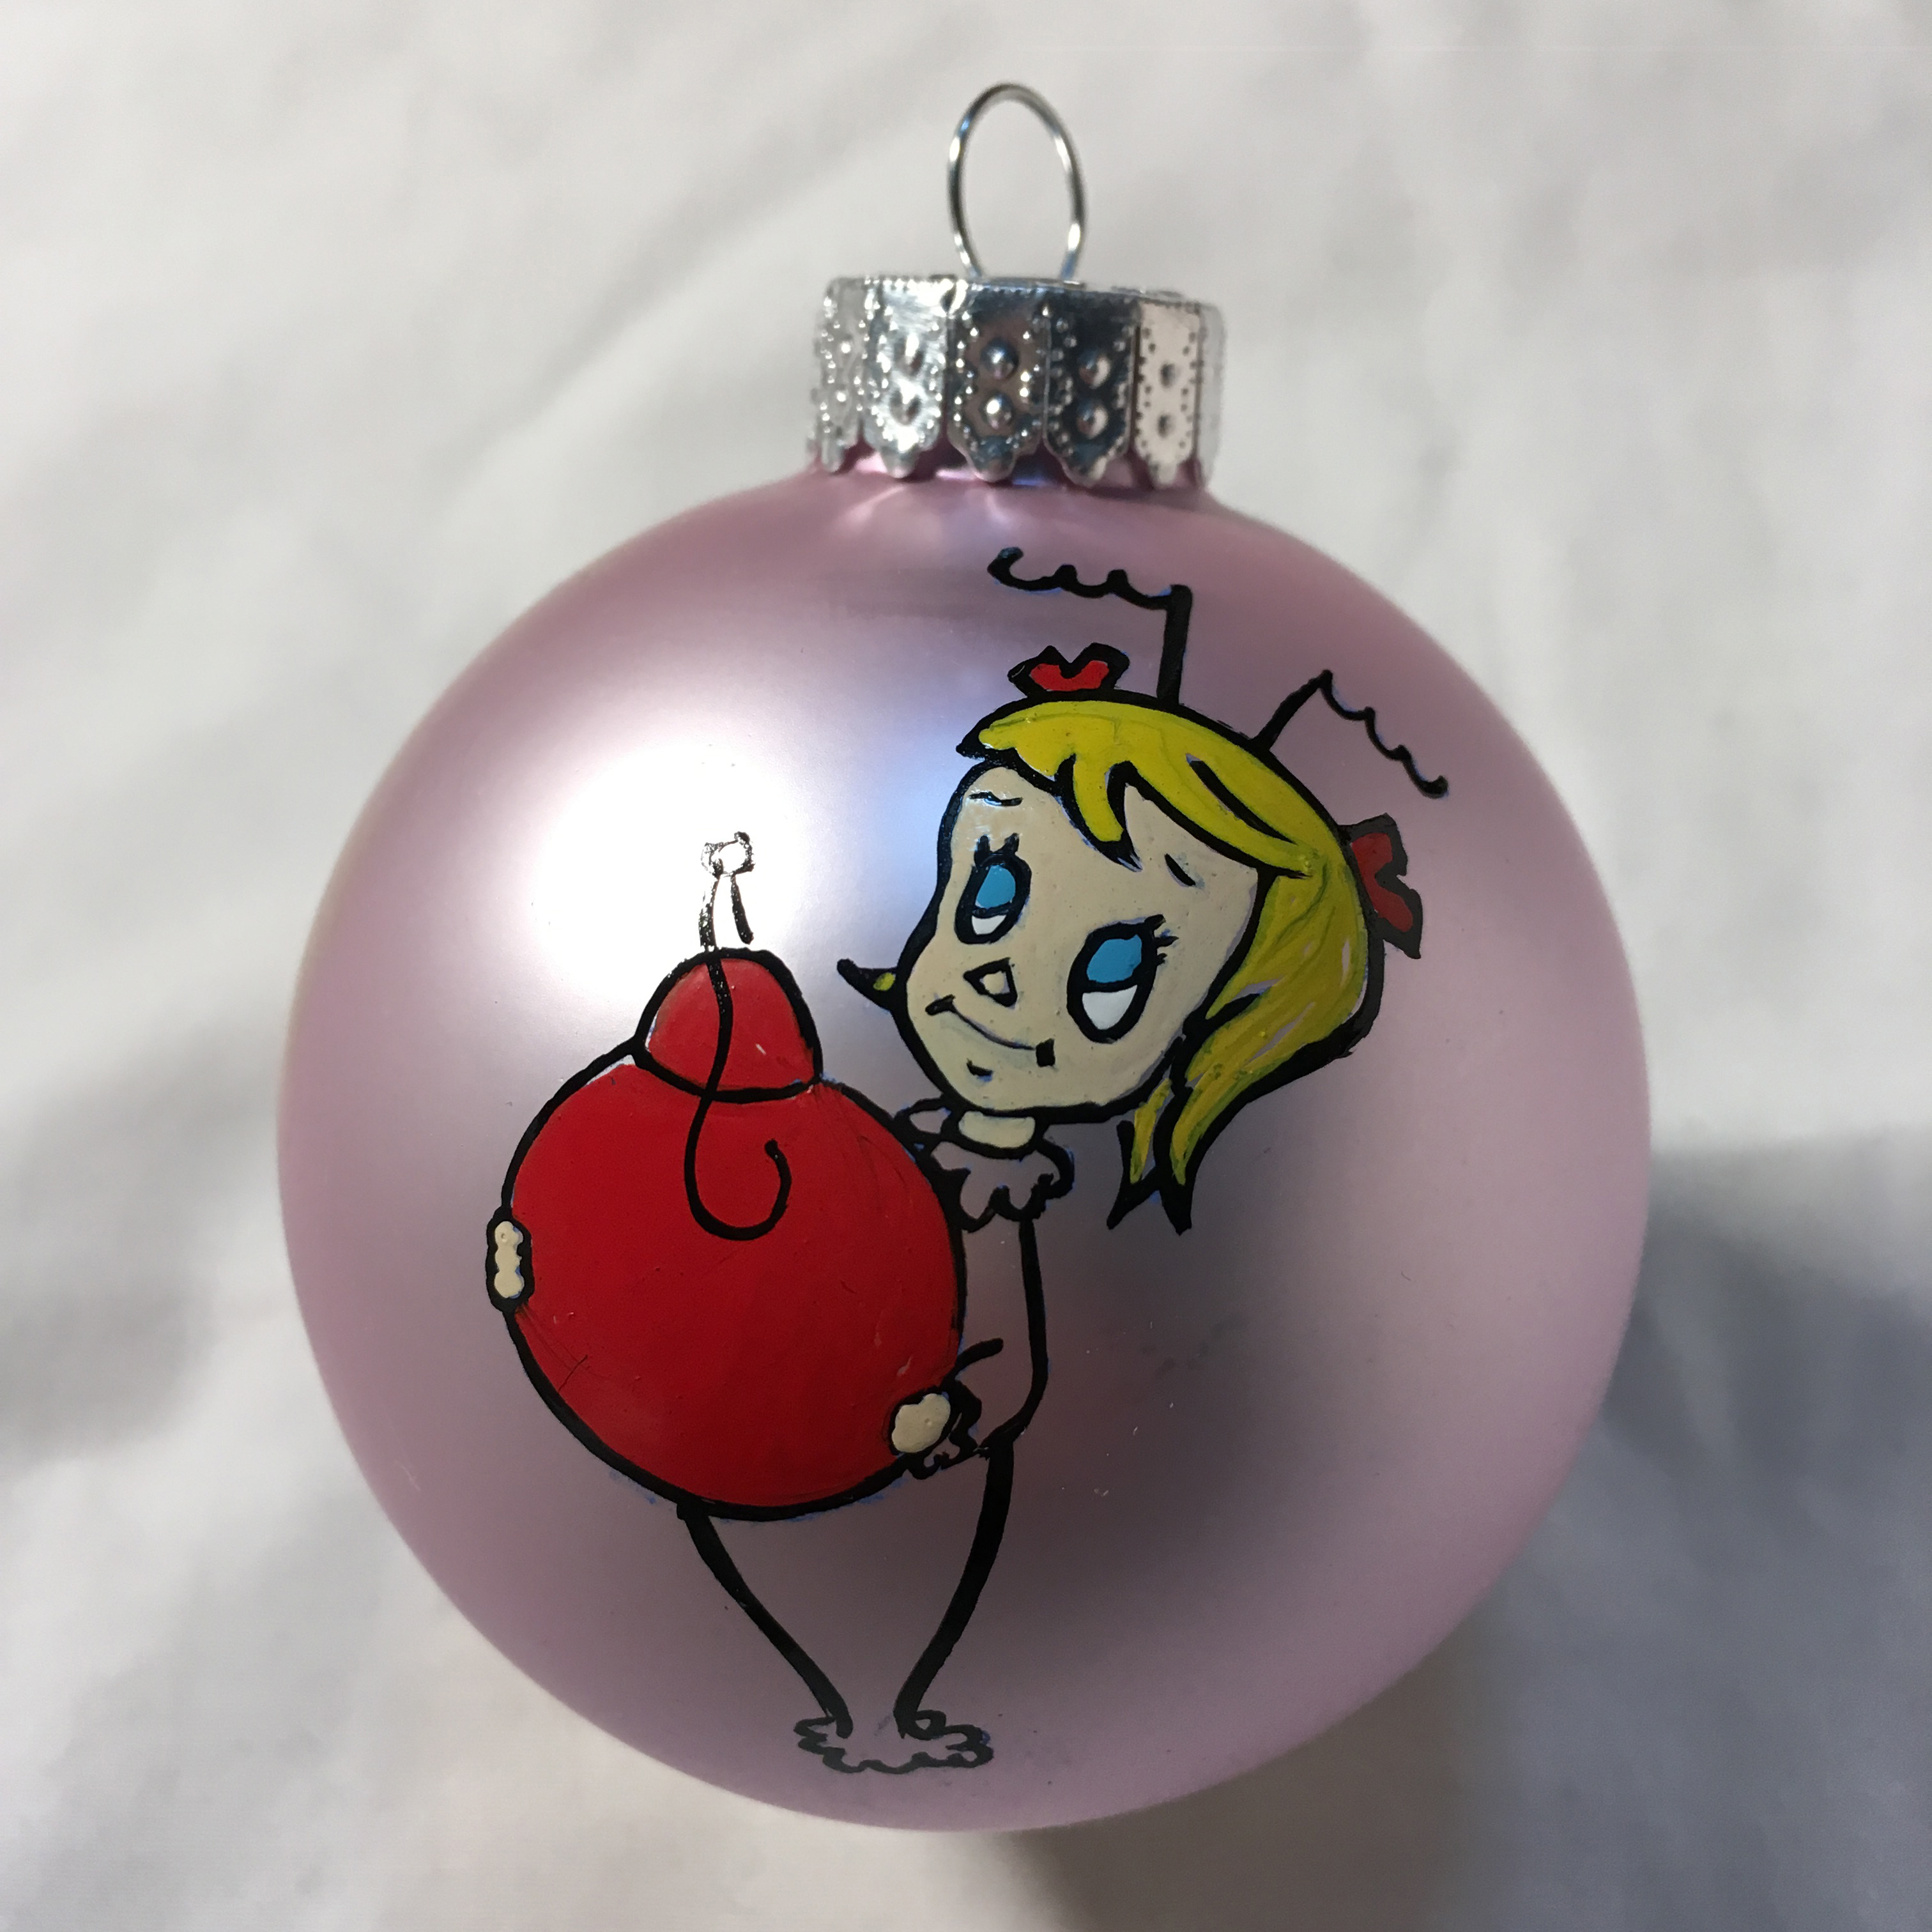 Cindy Lou Who ornament